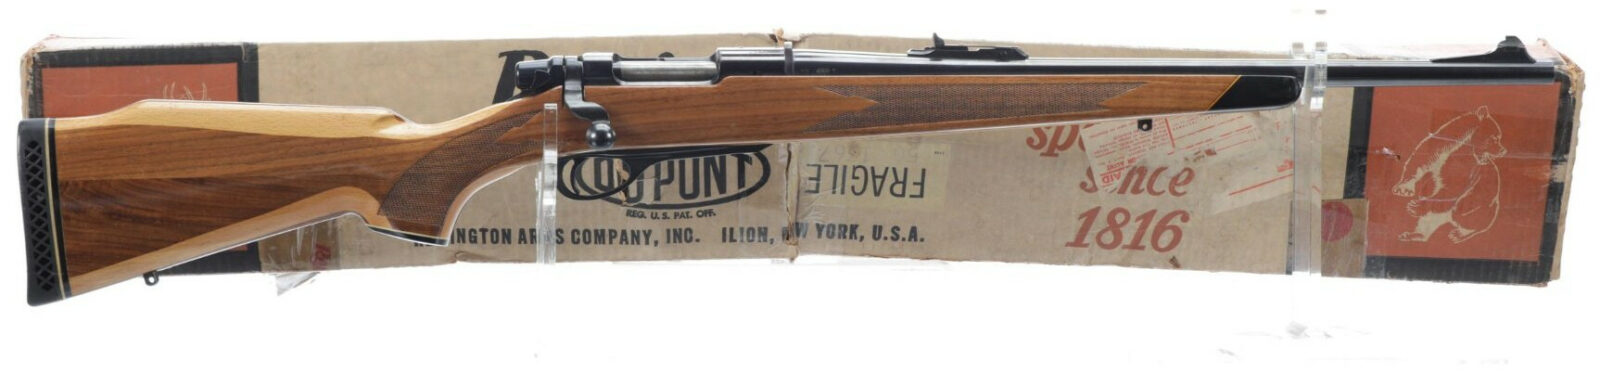 Remington 600 660 compact sporting rifle